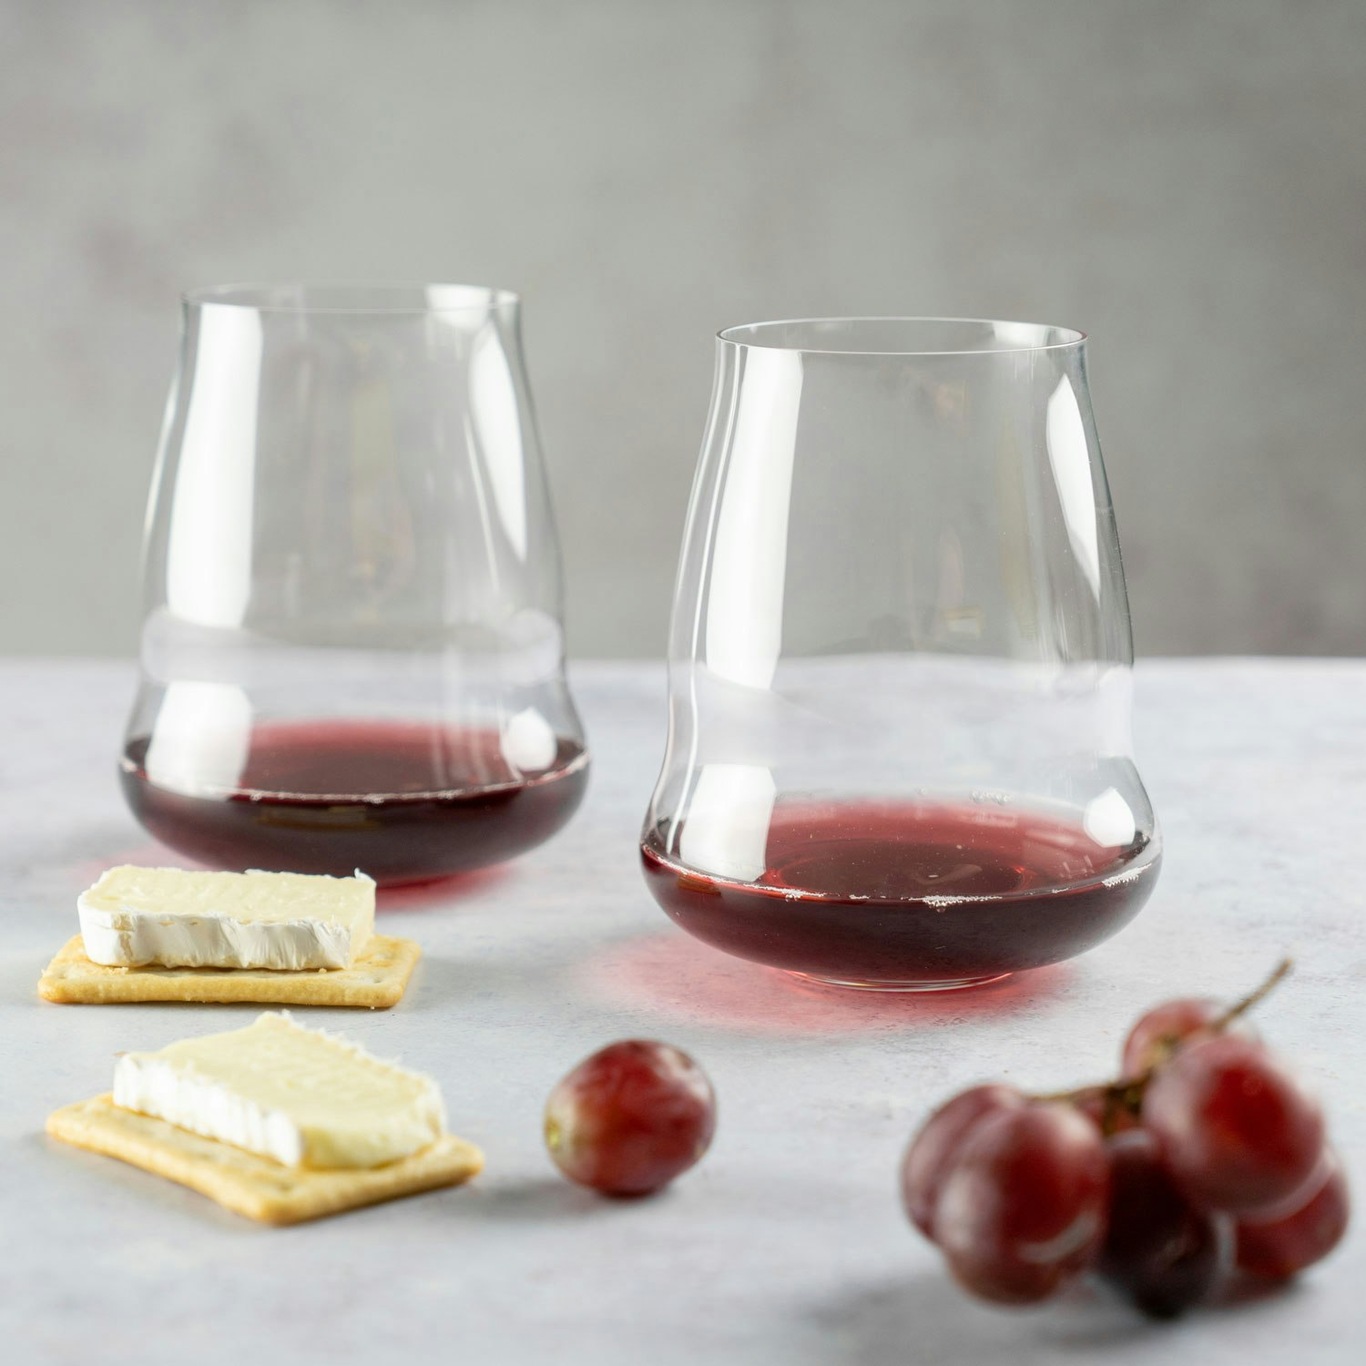 Riedel Winewings Pinot Noir / Nebbiolo Stemless Wine Glasses - Set